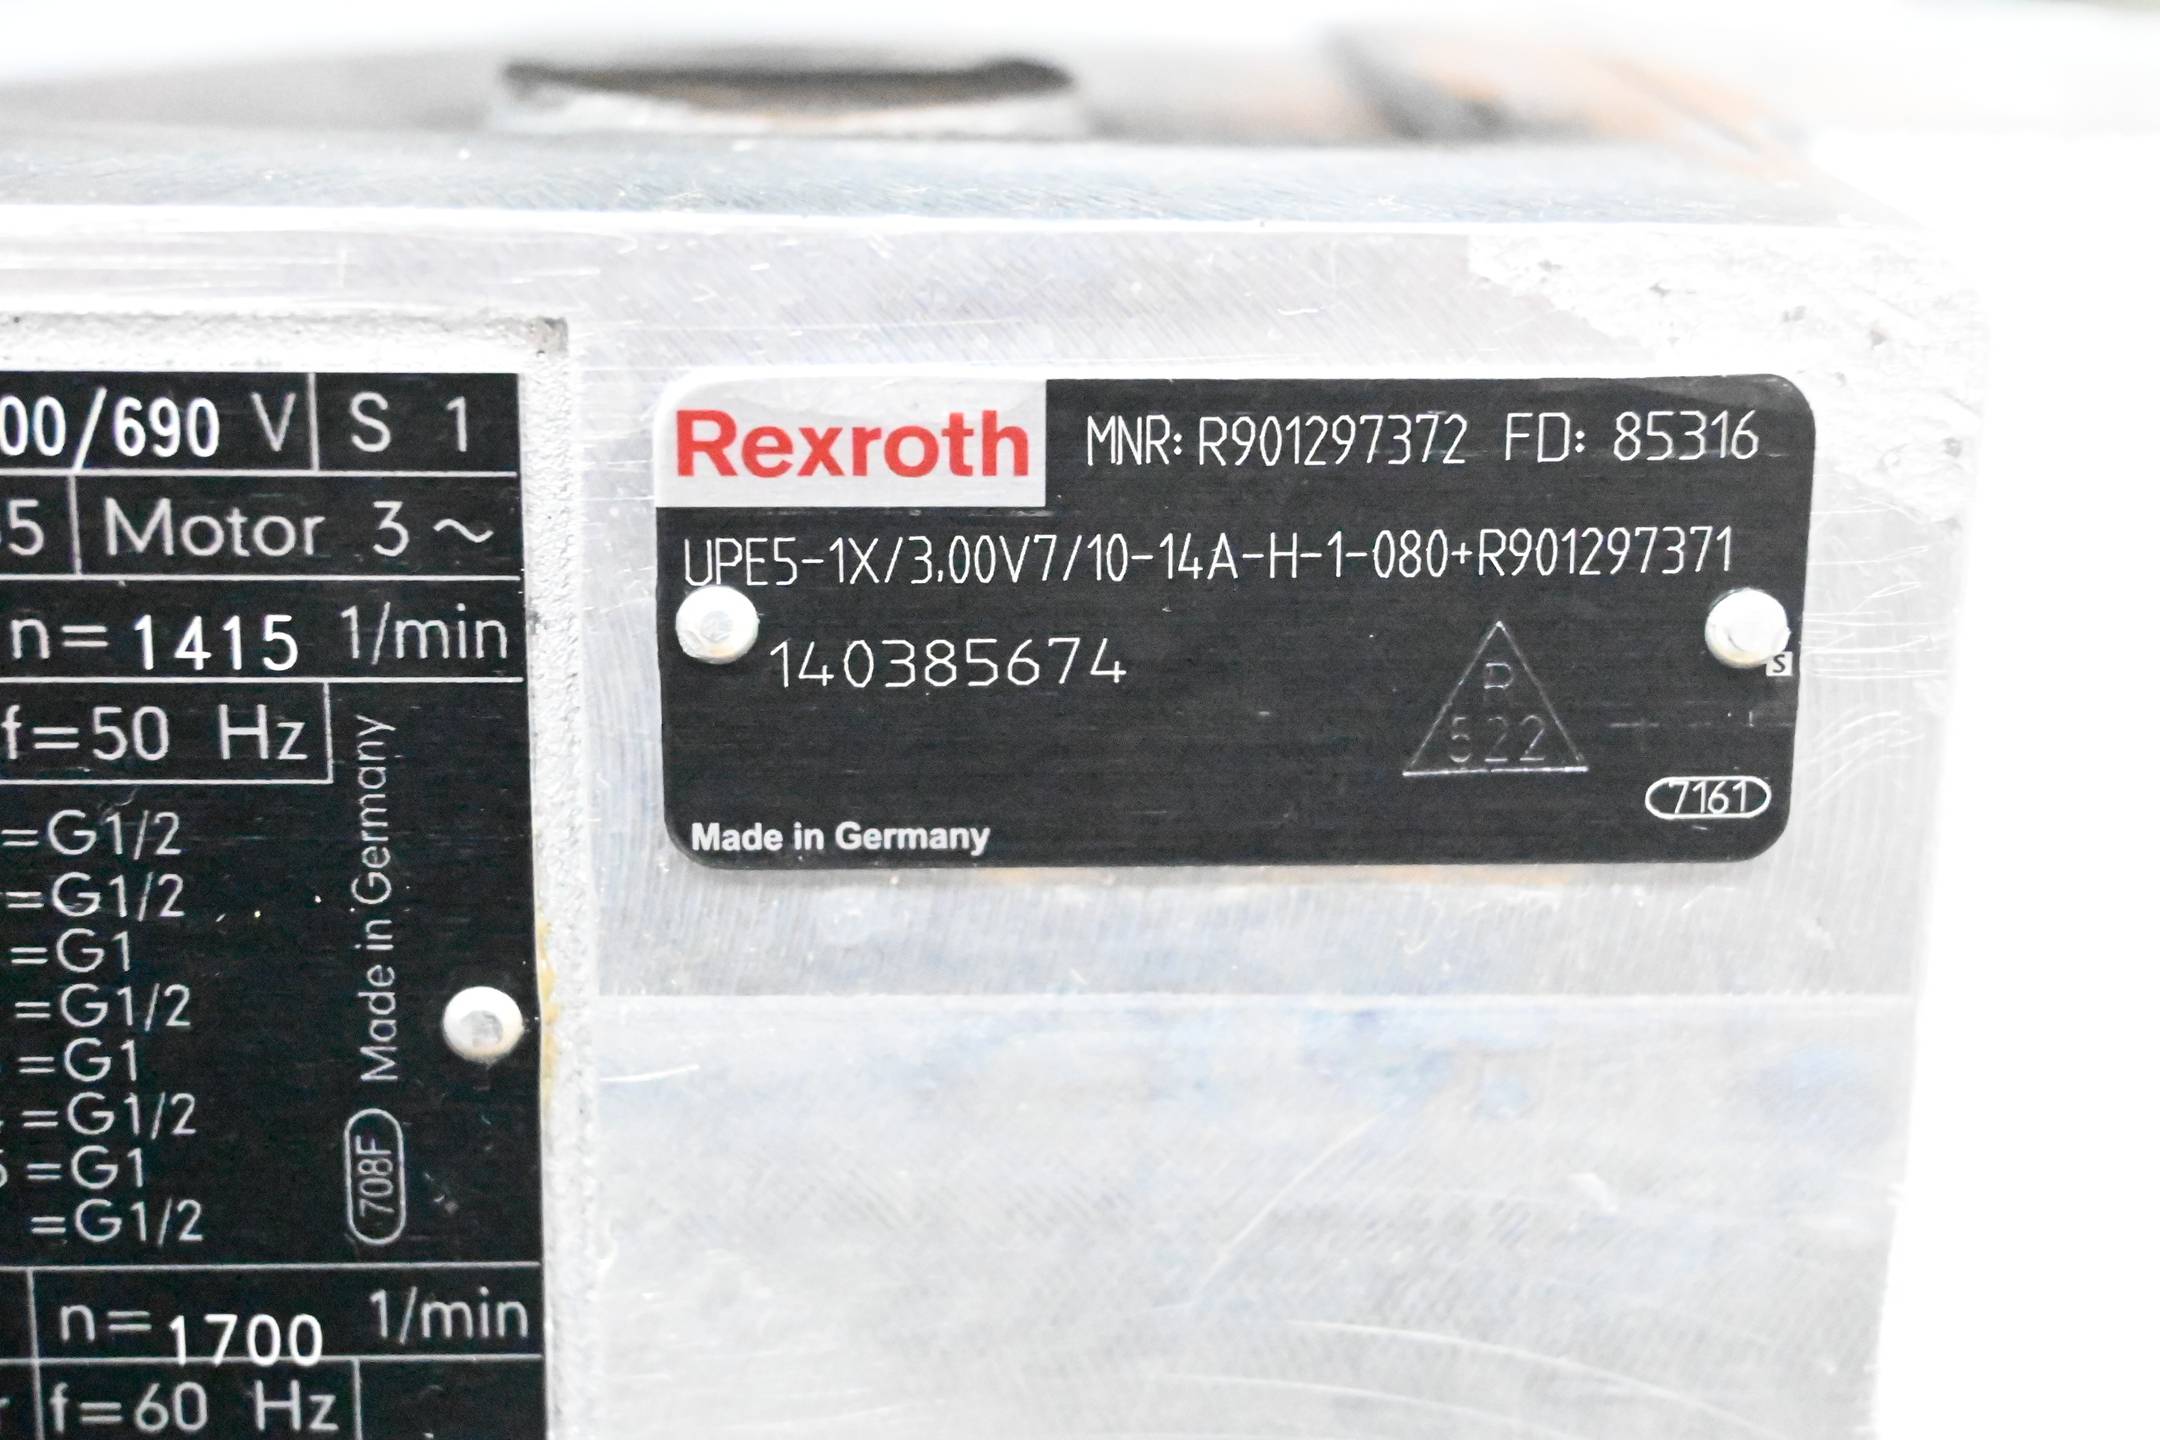 Rexroth Kompaktaggregat UPE5-1X/3,00V7/10-14A-H-1-080+R901297371 ( R901297372 )